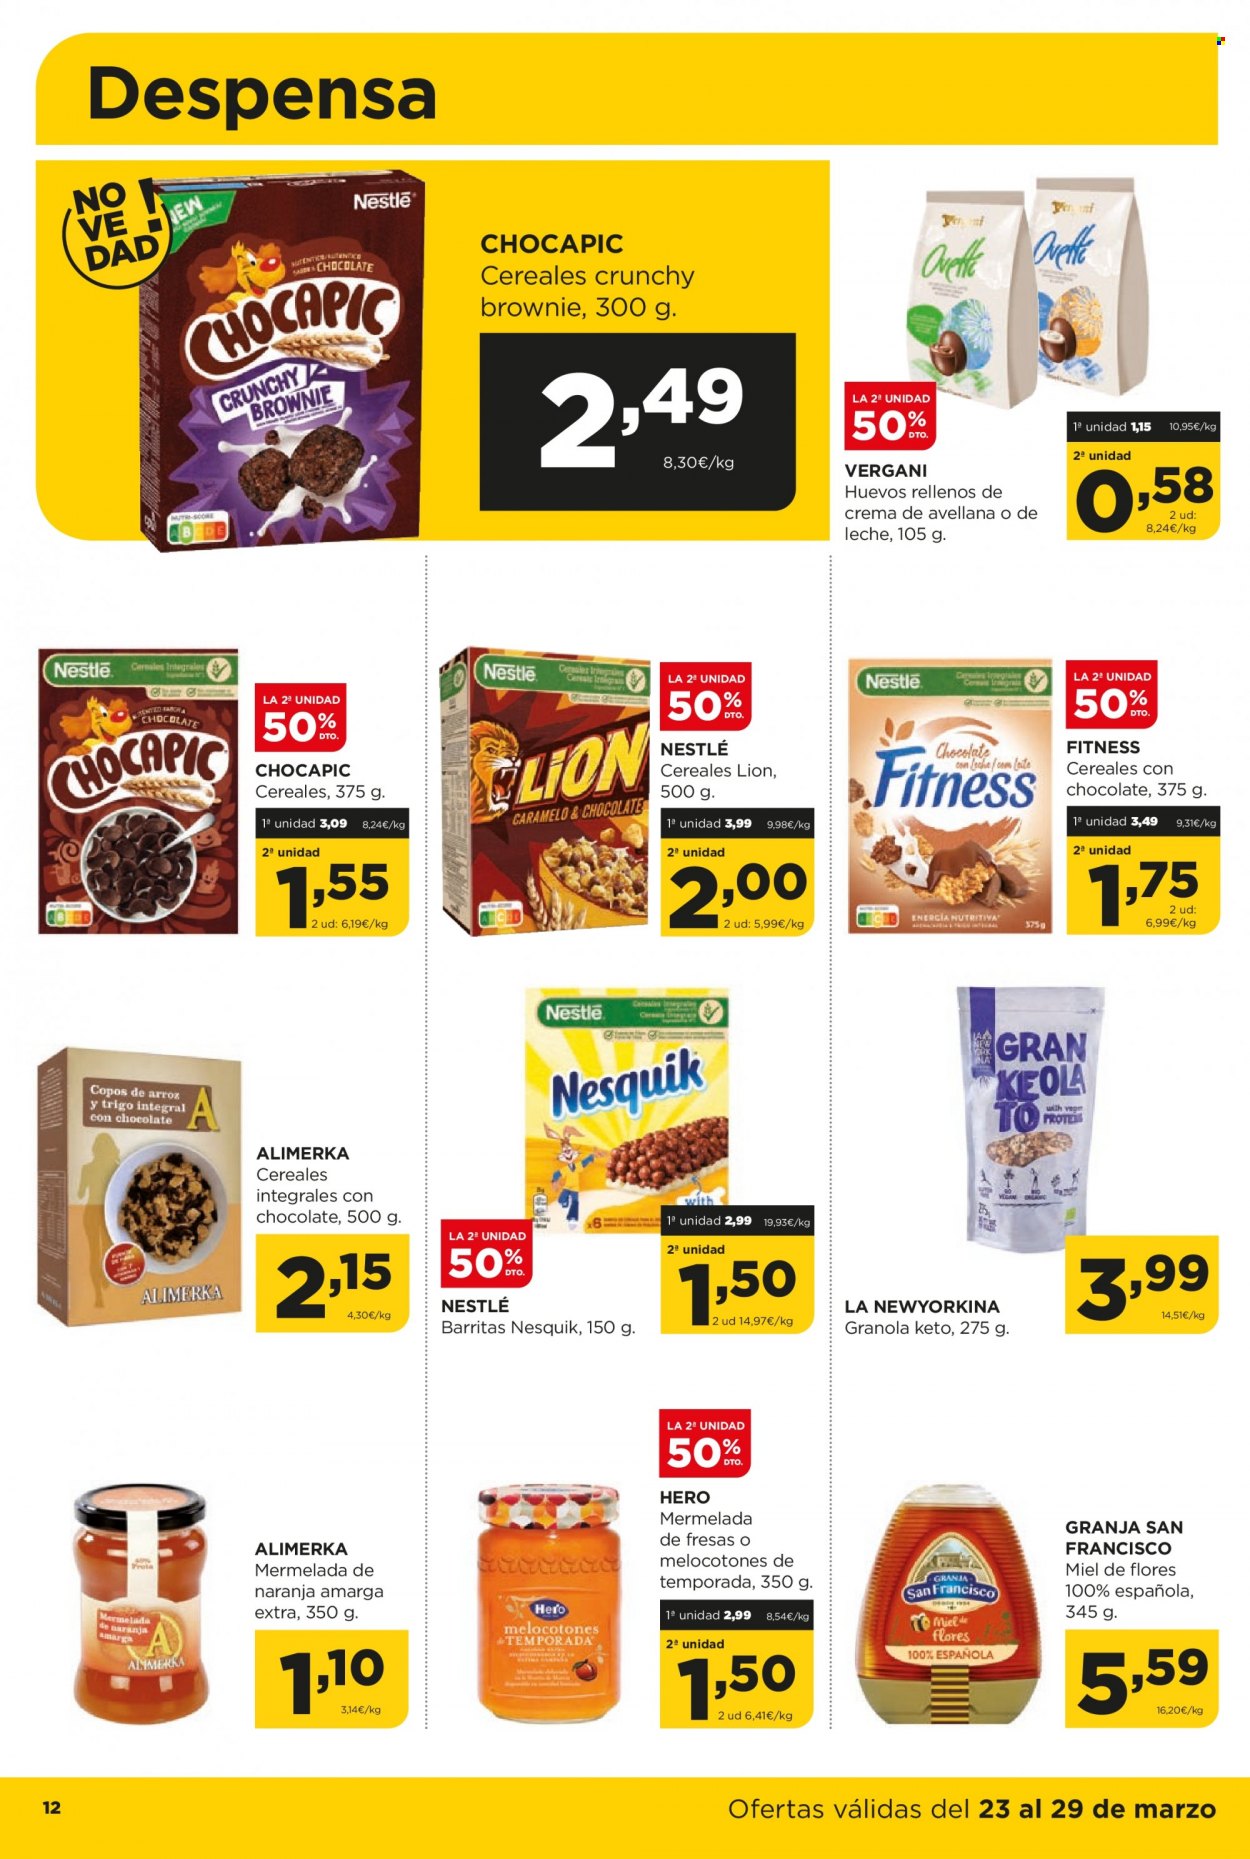 thumbnail - Folleto actual Alimerka - 23/03/23 - 29/03/23 - Ventas - cereales, Chocapic, granola, mermelada, miel, huevo de chocolate, Nestlé, barra cereal, Nesquik, Hero. Página 12.